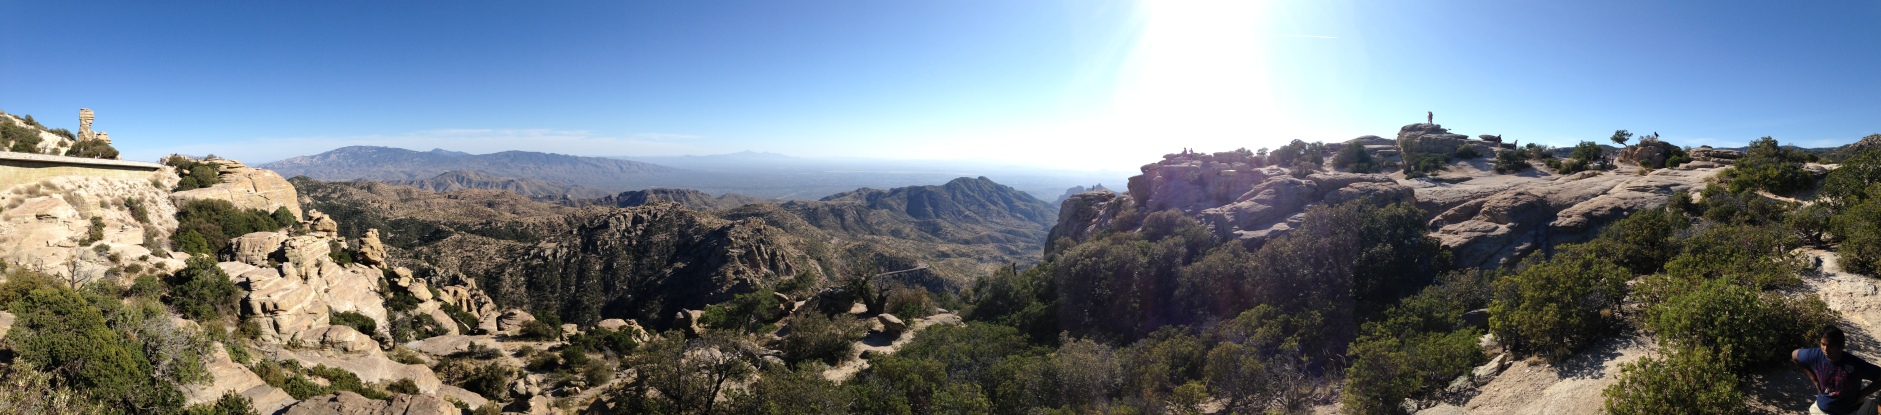 Tucson Panorama